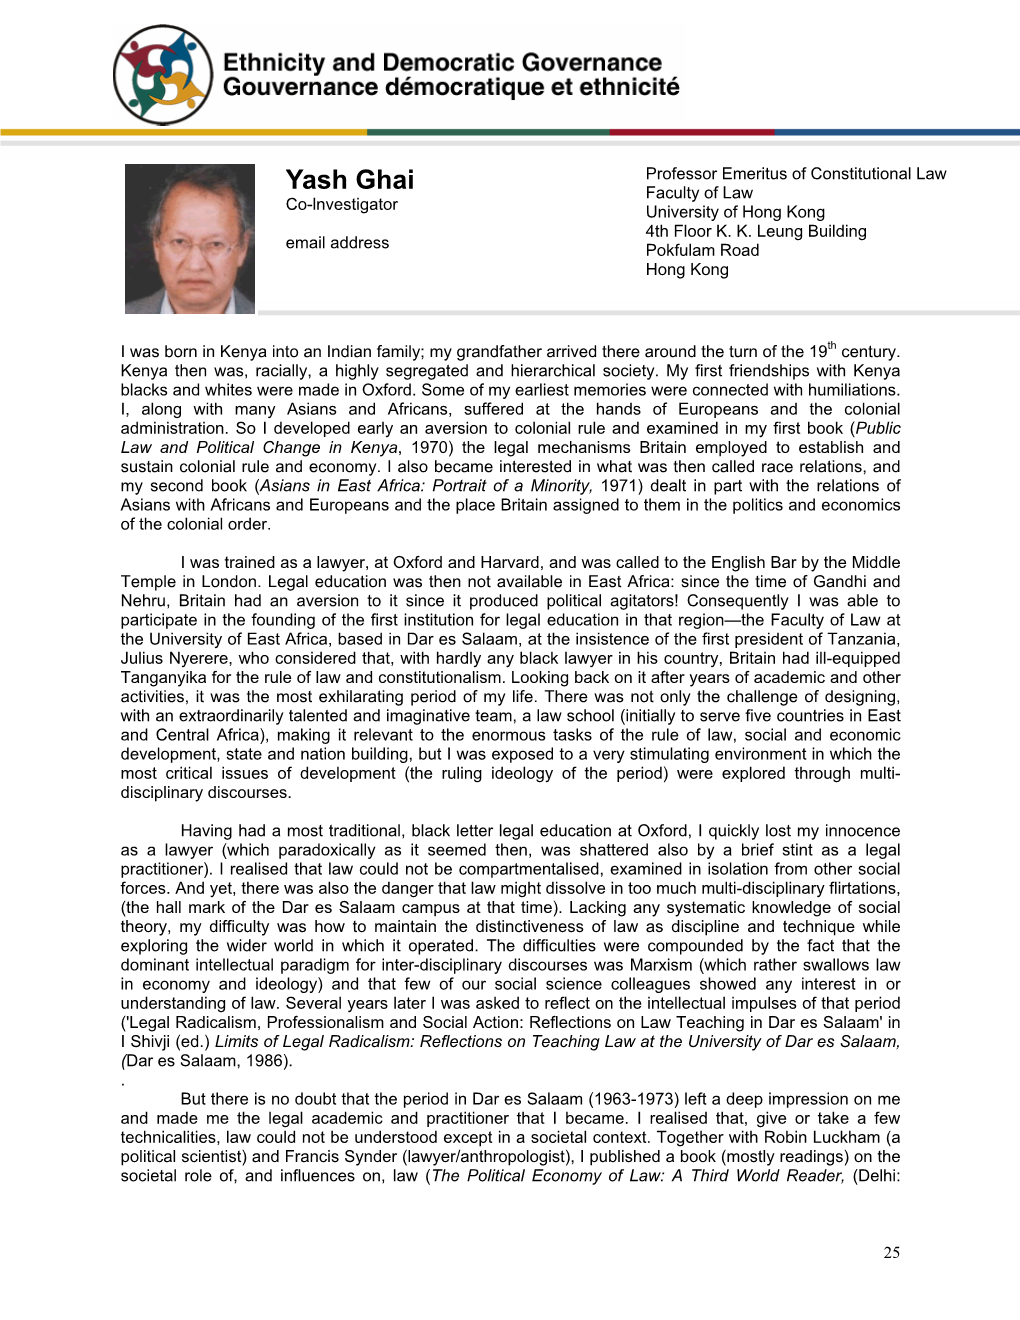 Yash Ghai Faculty of Law Co-Lnvestigator University of Hong Kong 4Th Floor K